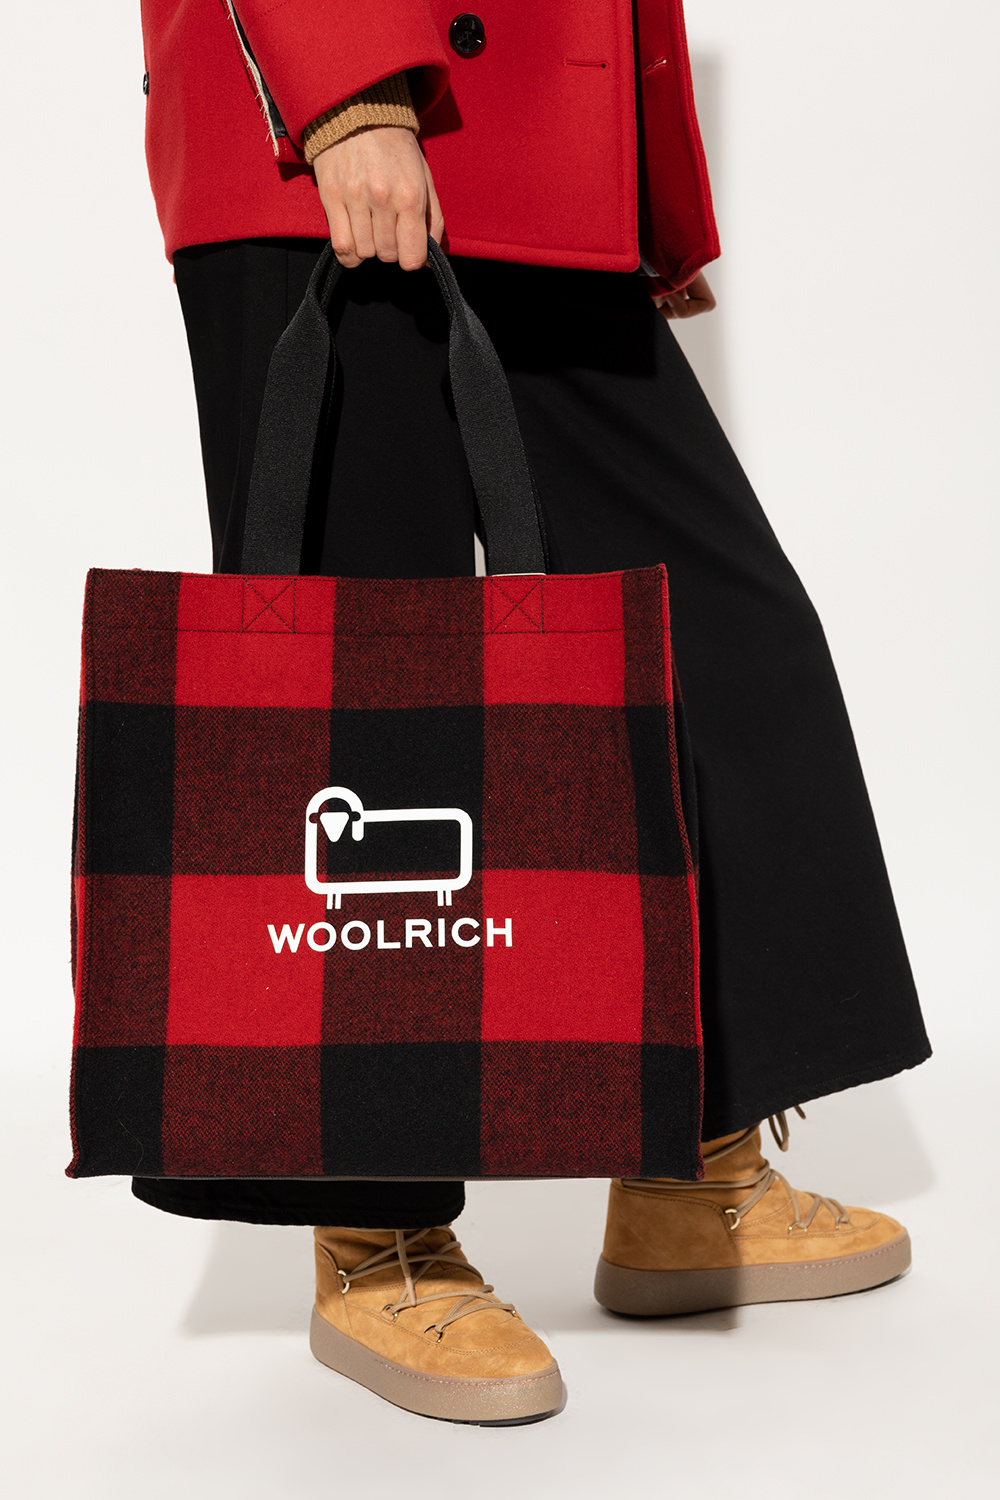 Woolrich Shopper Marmont bag